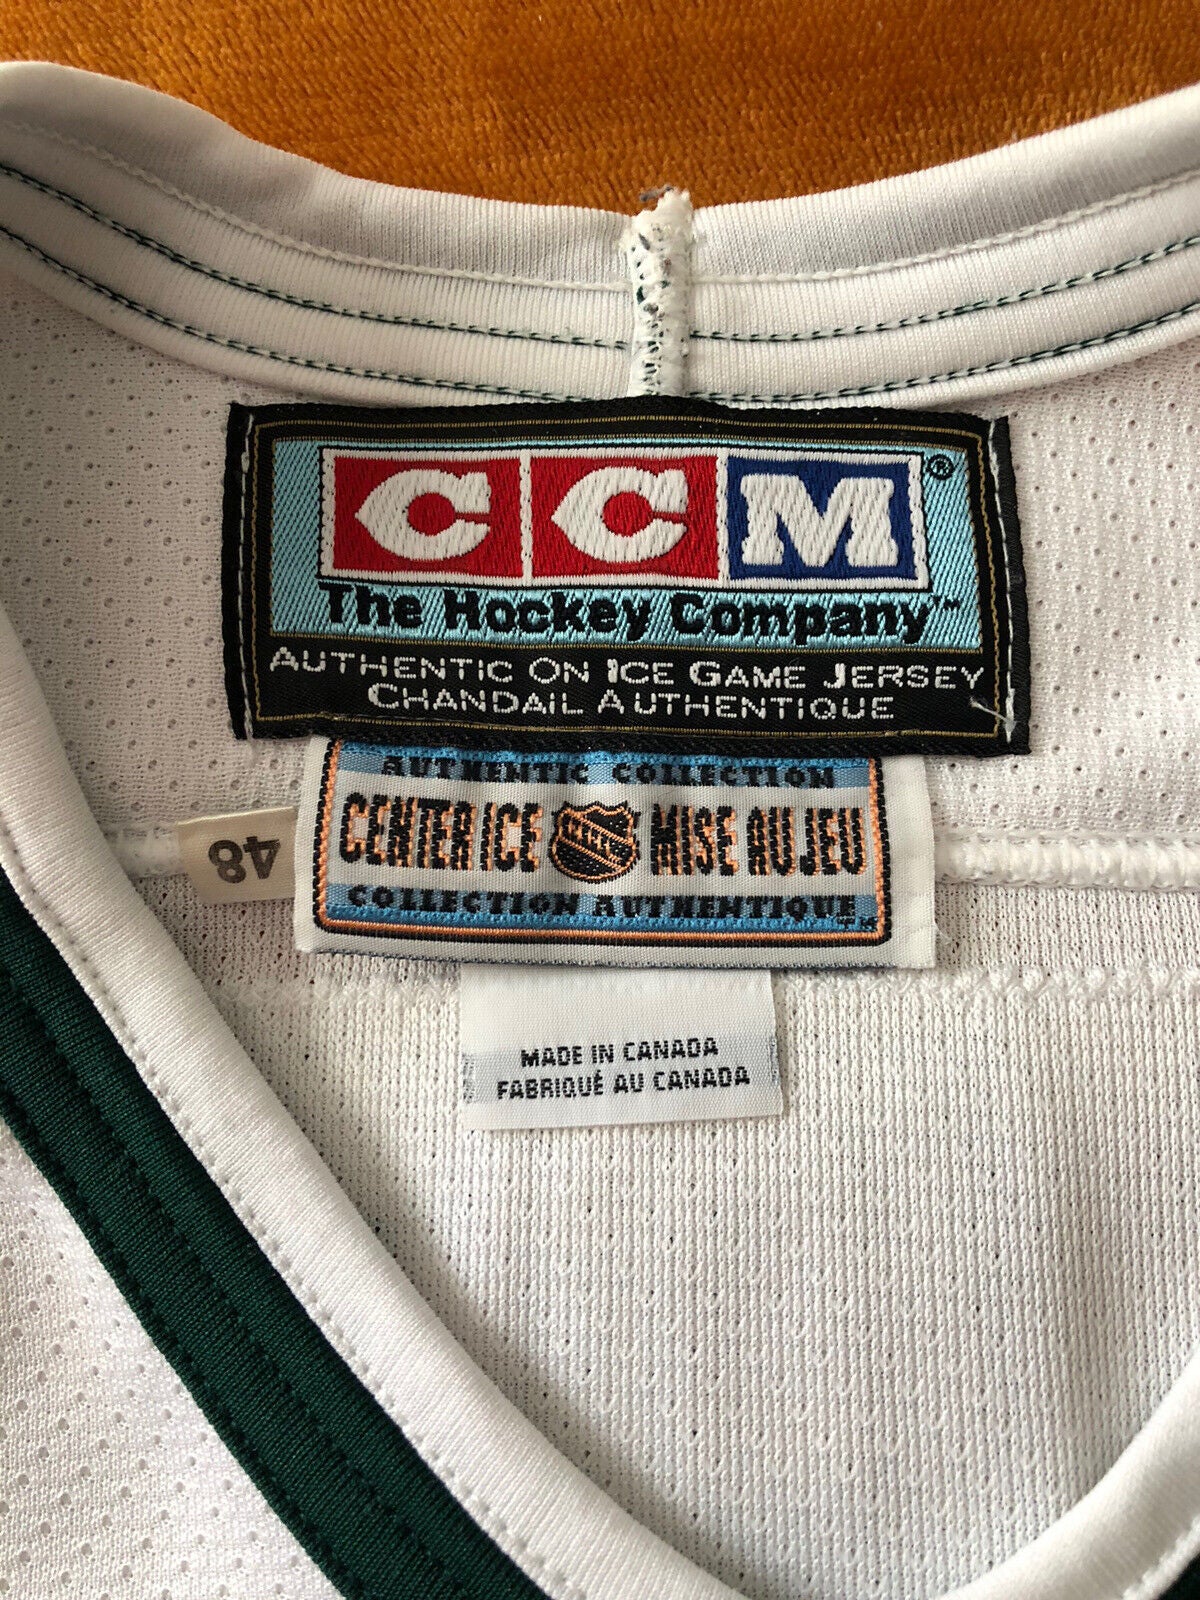 Dallas Stars Jersey MIC Authentic Vintage NHL Modano CCM Stanley